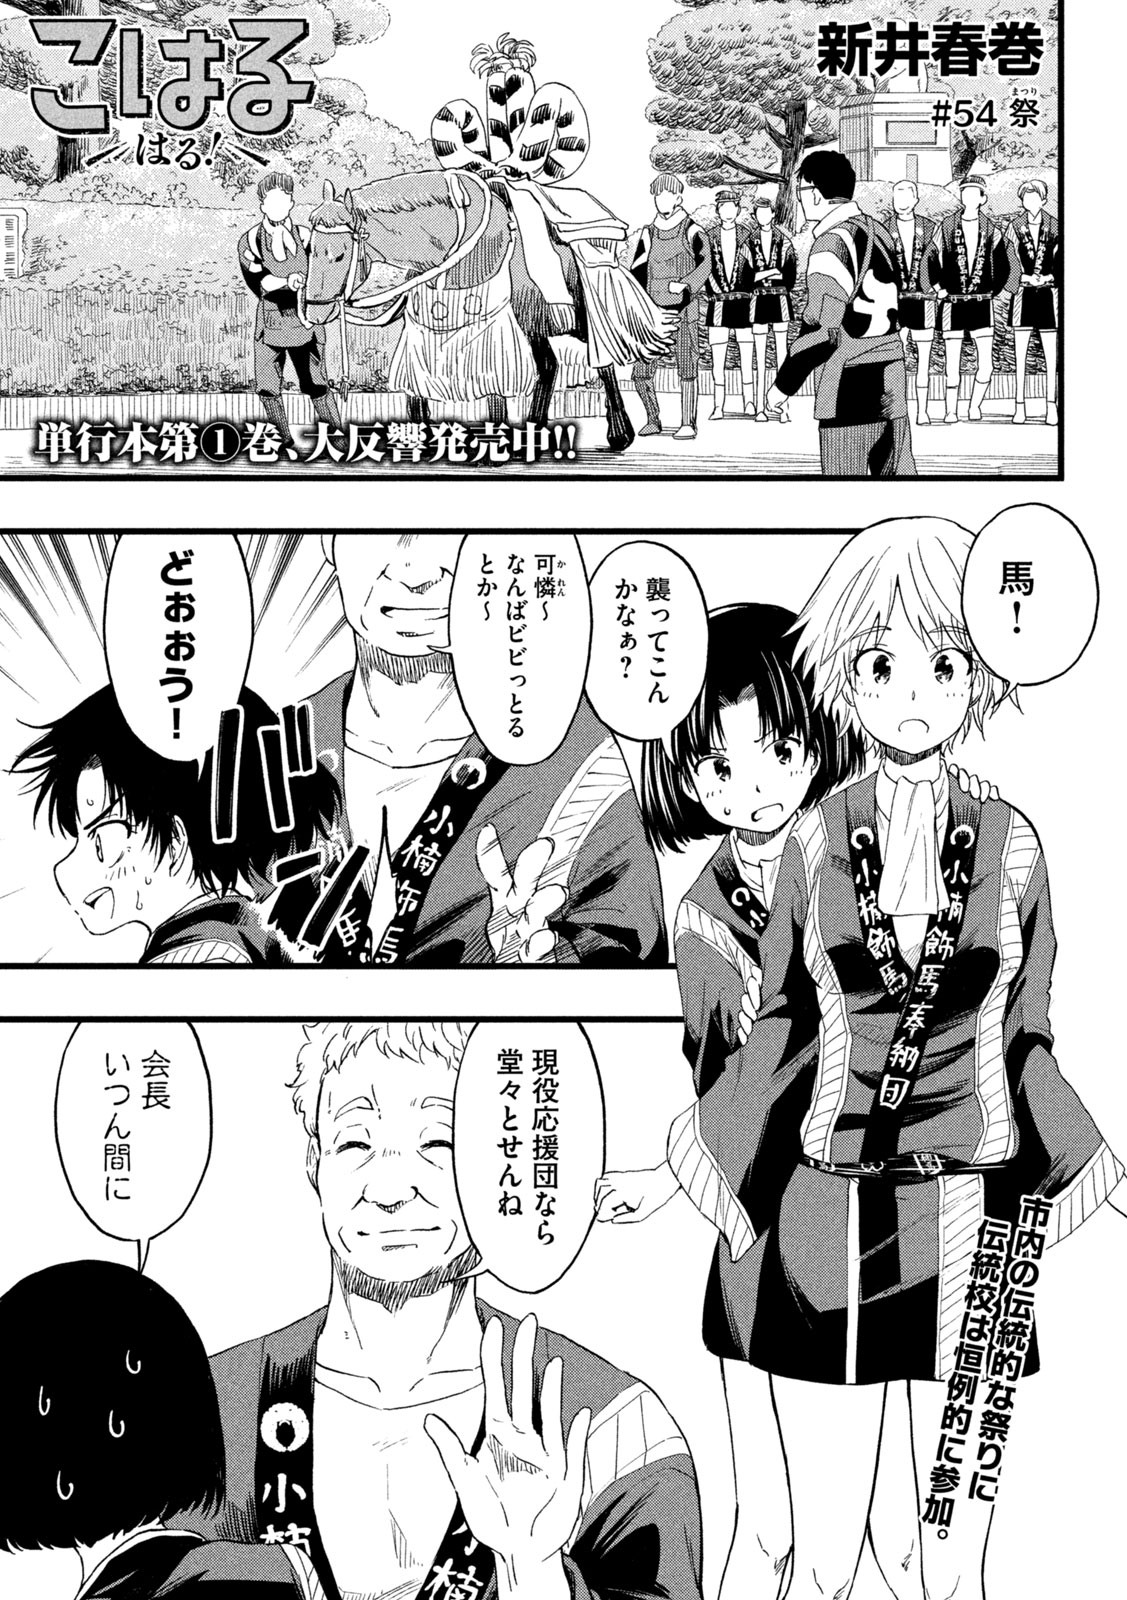 Koharu haru! - Chapter 54 - Page 1